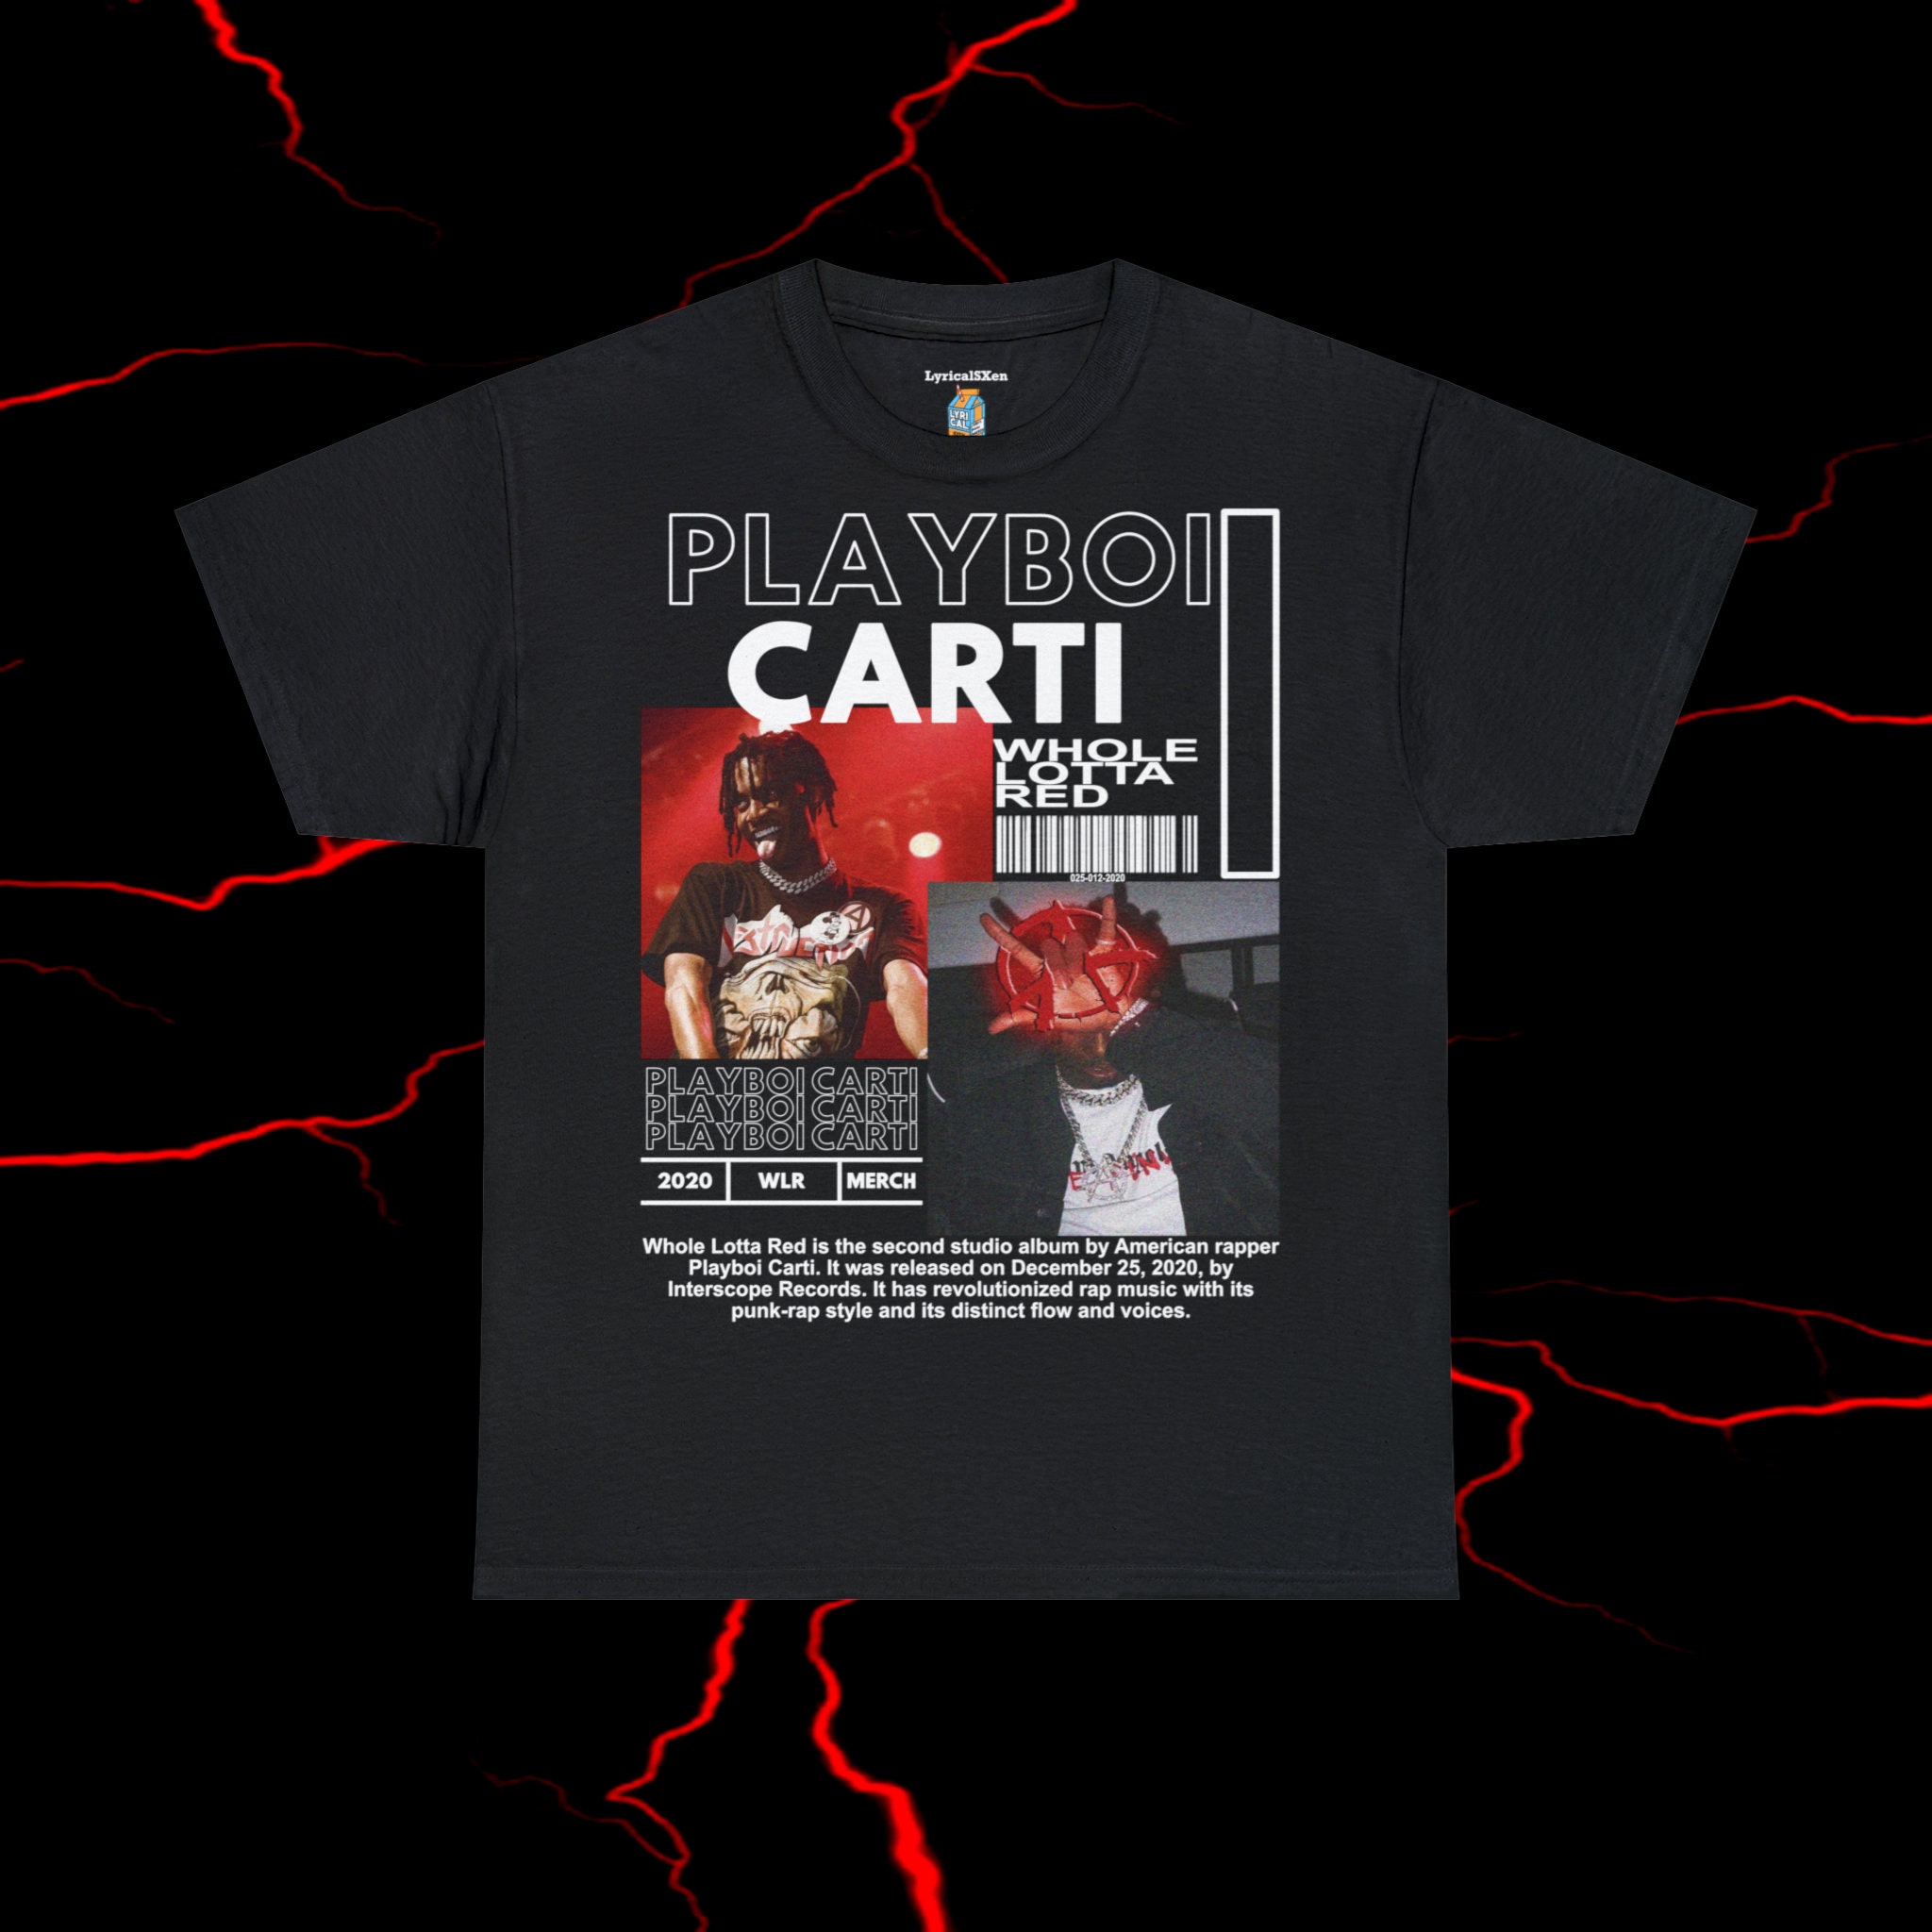 Playboi Carti playboi carti rockstar made t shirt x-small